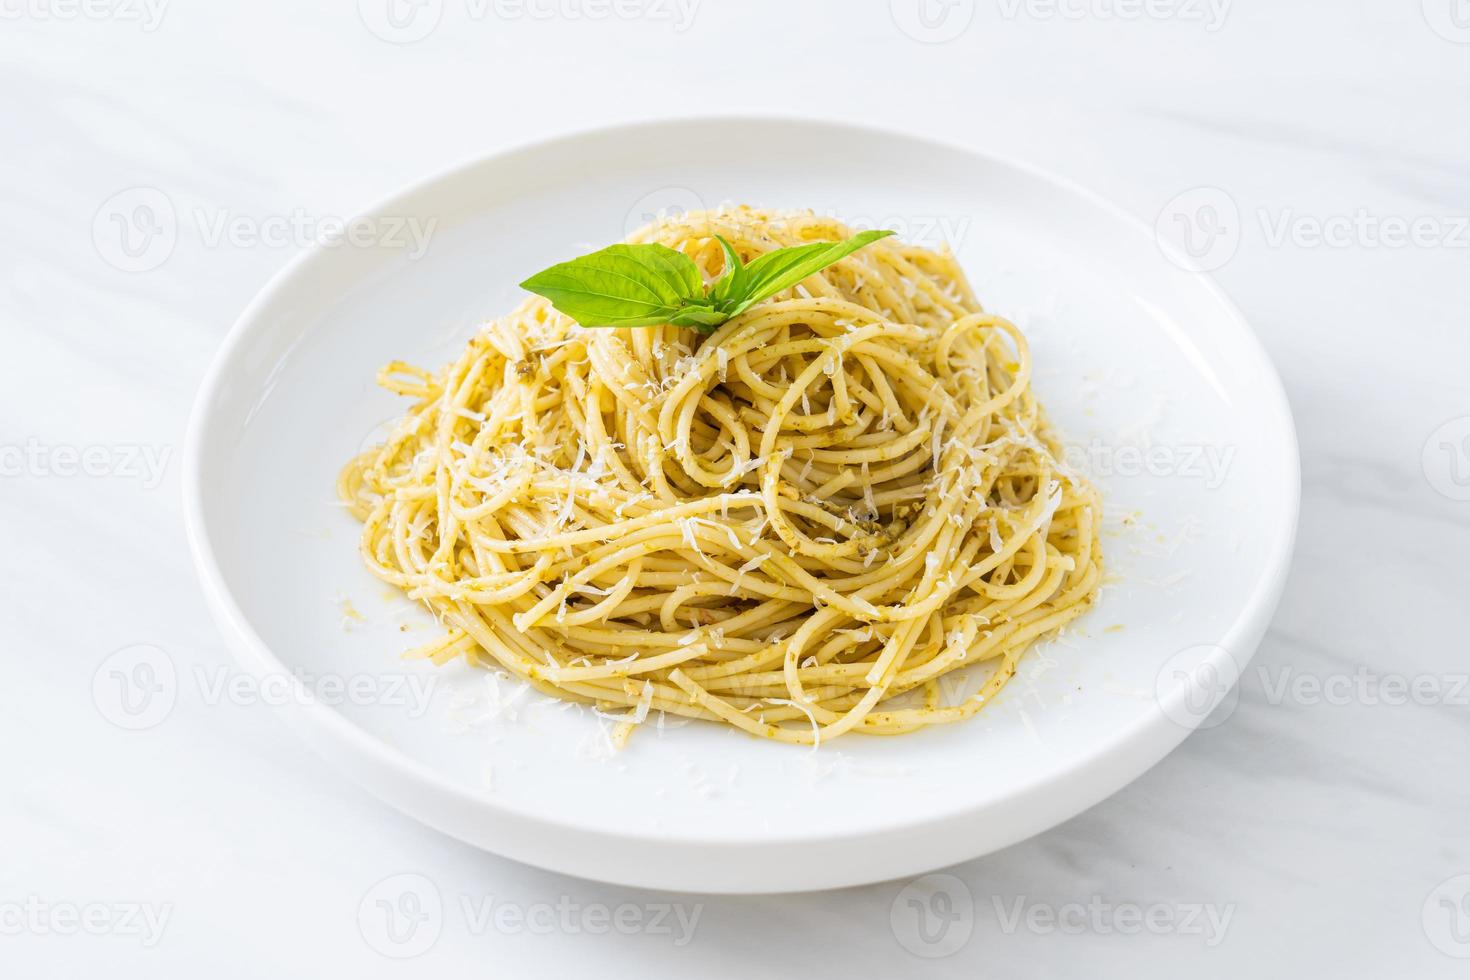 pâtes spaghetti au pesto - cuisine végétarienne et style de cuisine italienne photo